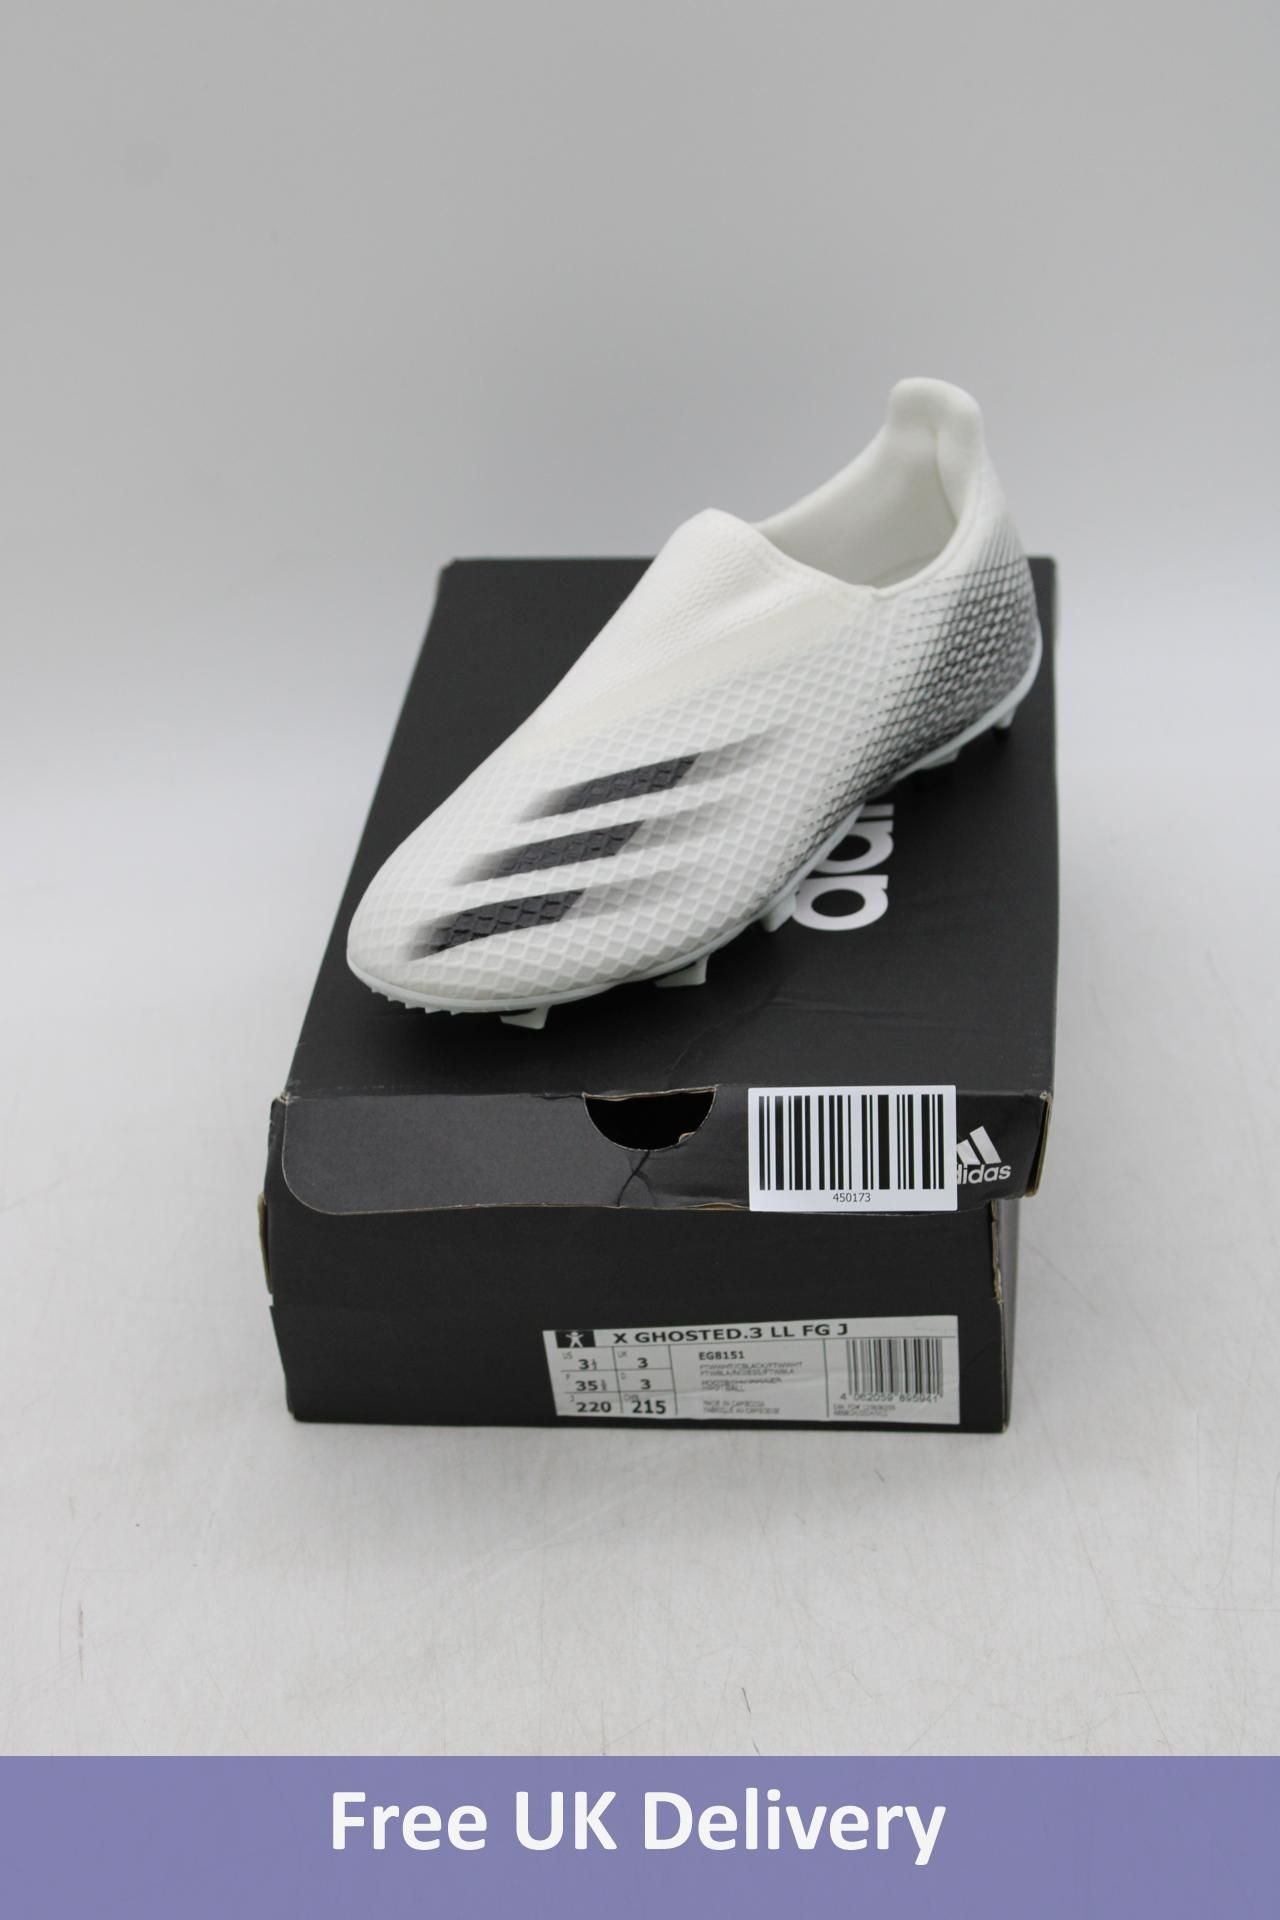 Adidas X Ghosted .3 Ll Fg Football Boots, White/Black, UK 3. Box damaged